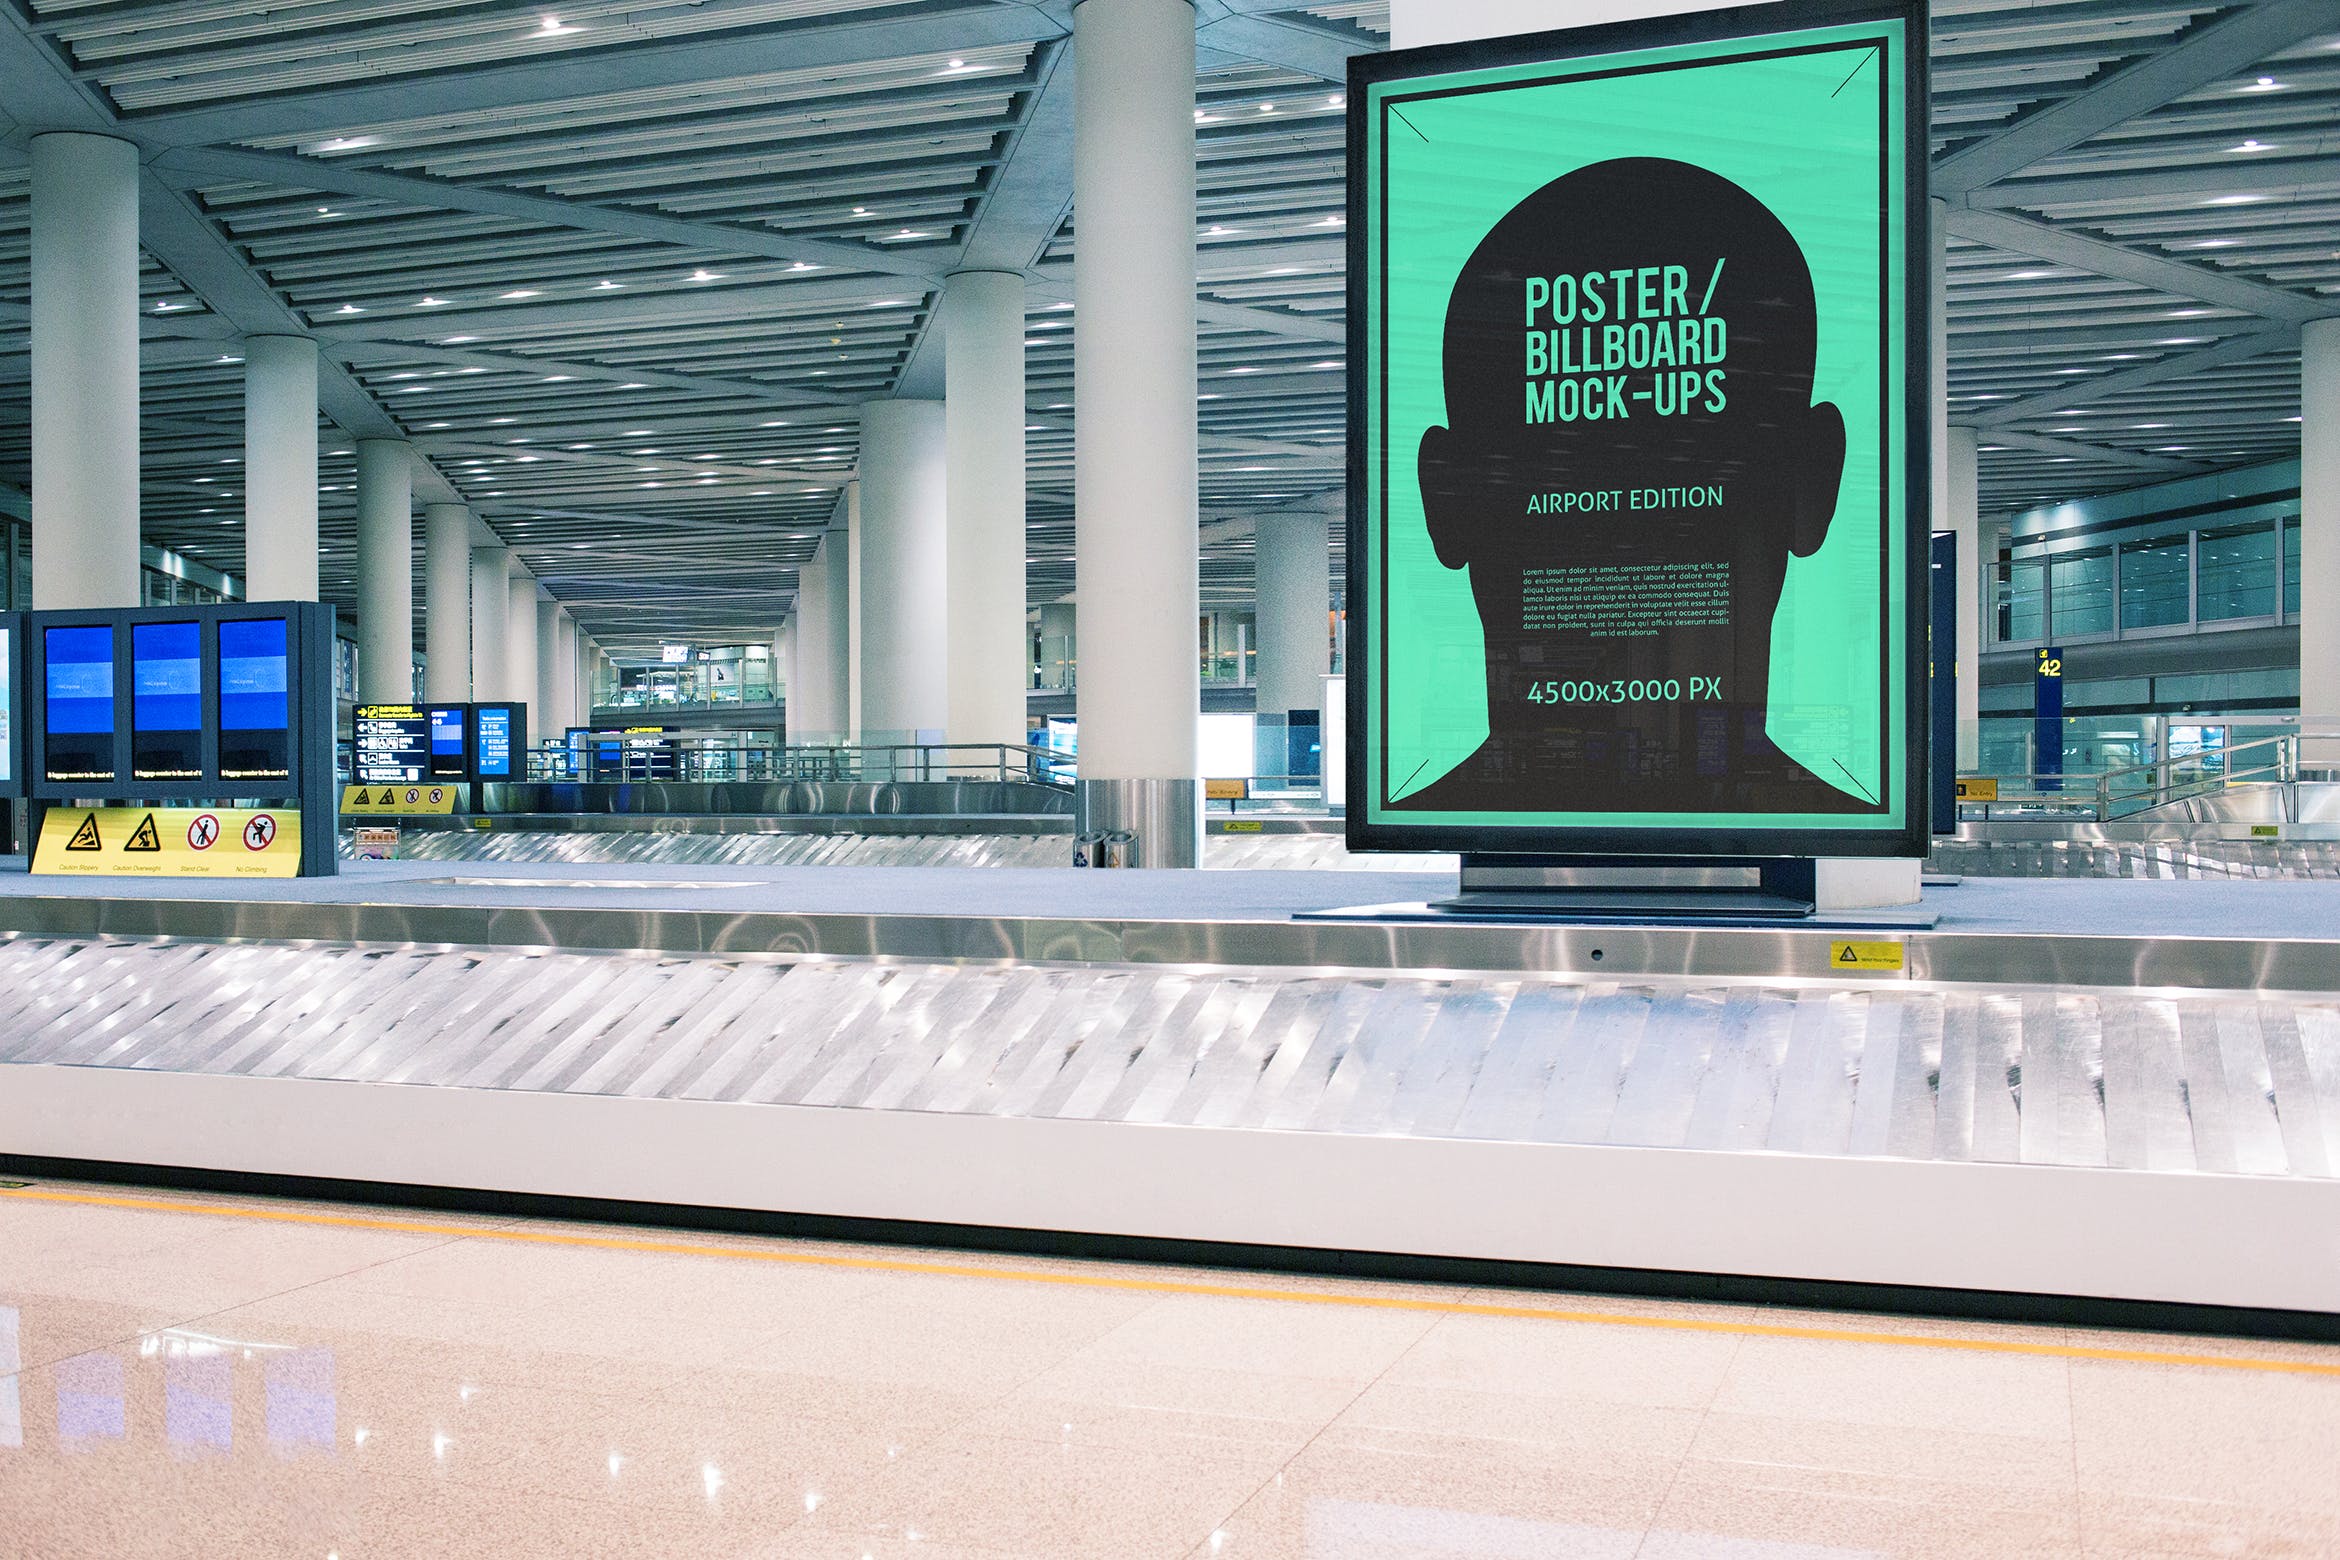 机场候机室海报/广告牌样机第一素材精选模板#8 Poster / Billboard Mock-ups – Airport Edition #8插图